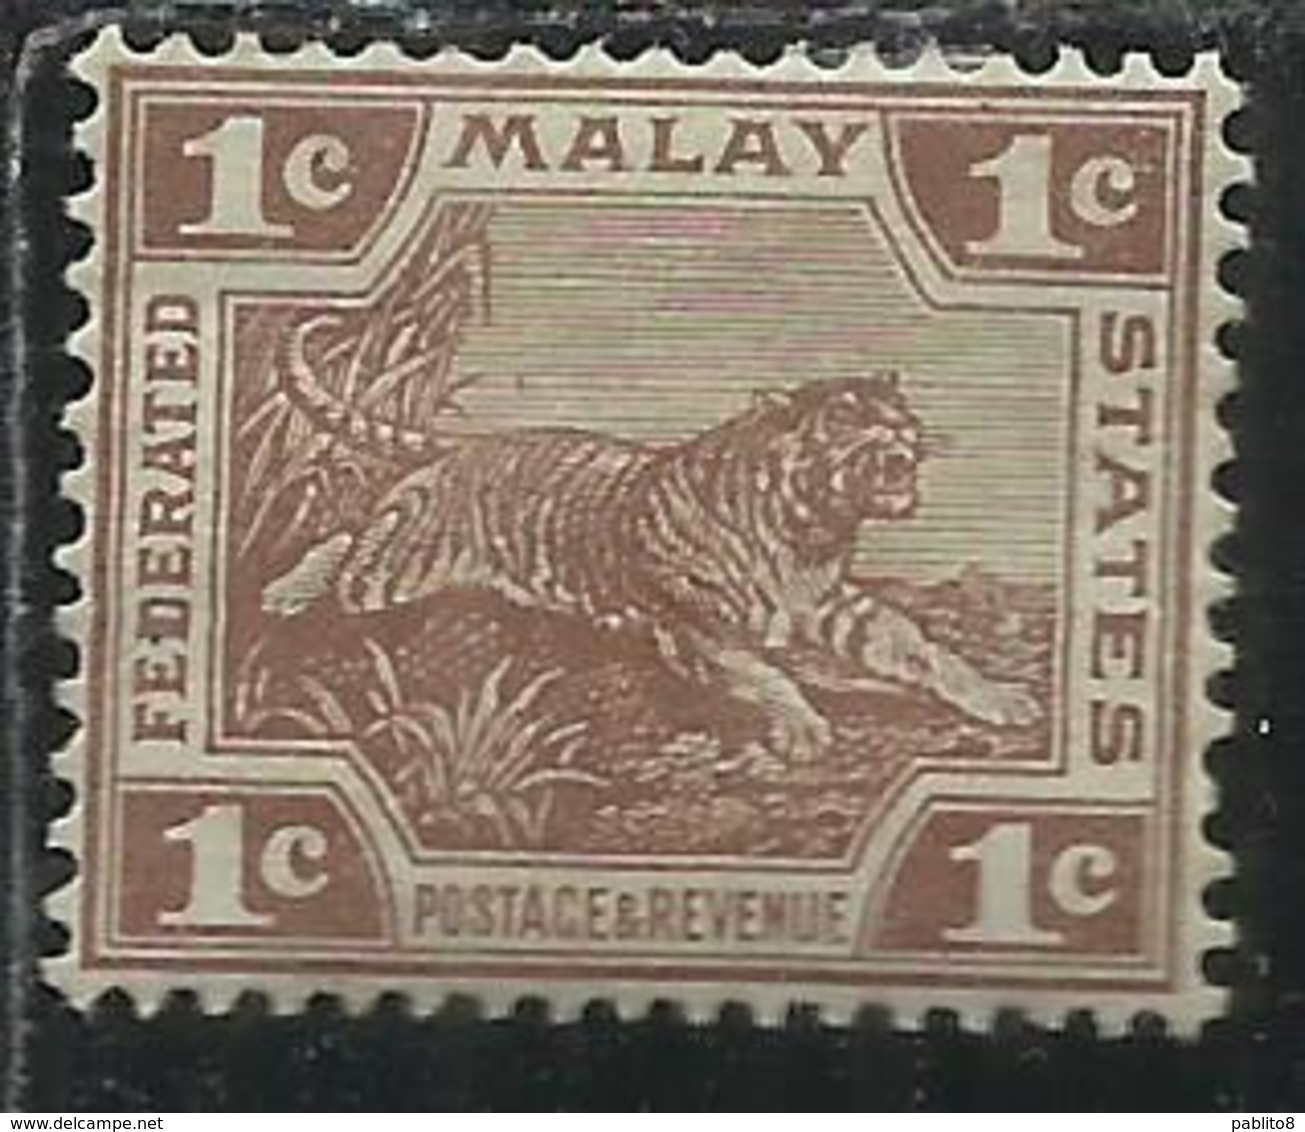 MALAYA MALAISIE MALESIA FEDERATED STATES 1906 1922 WILD FAUNA TIGER TIGRE CENT. 1c MLH - Federation Of Malaya